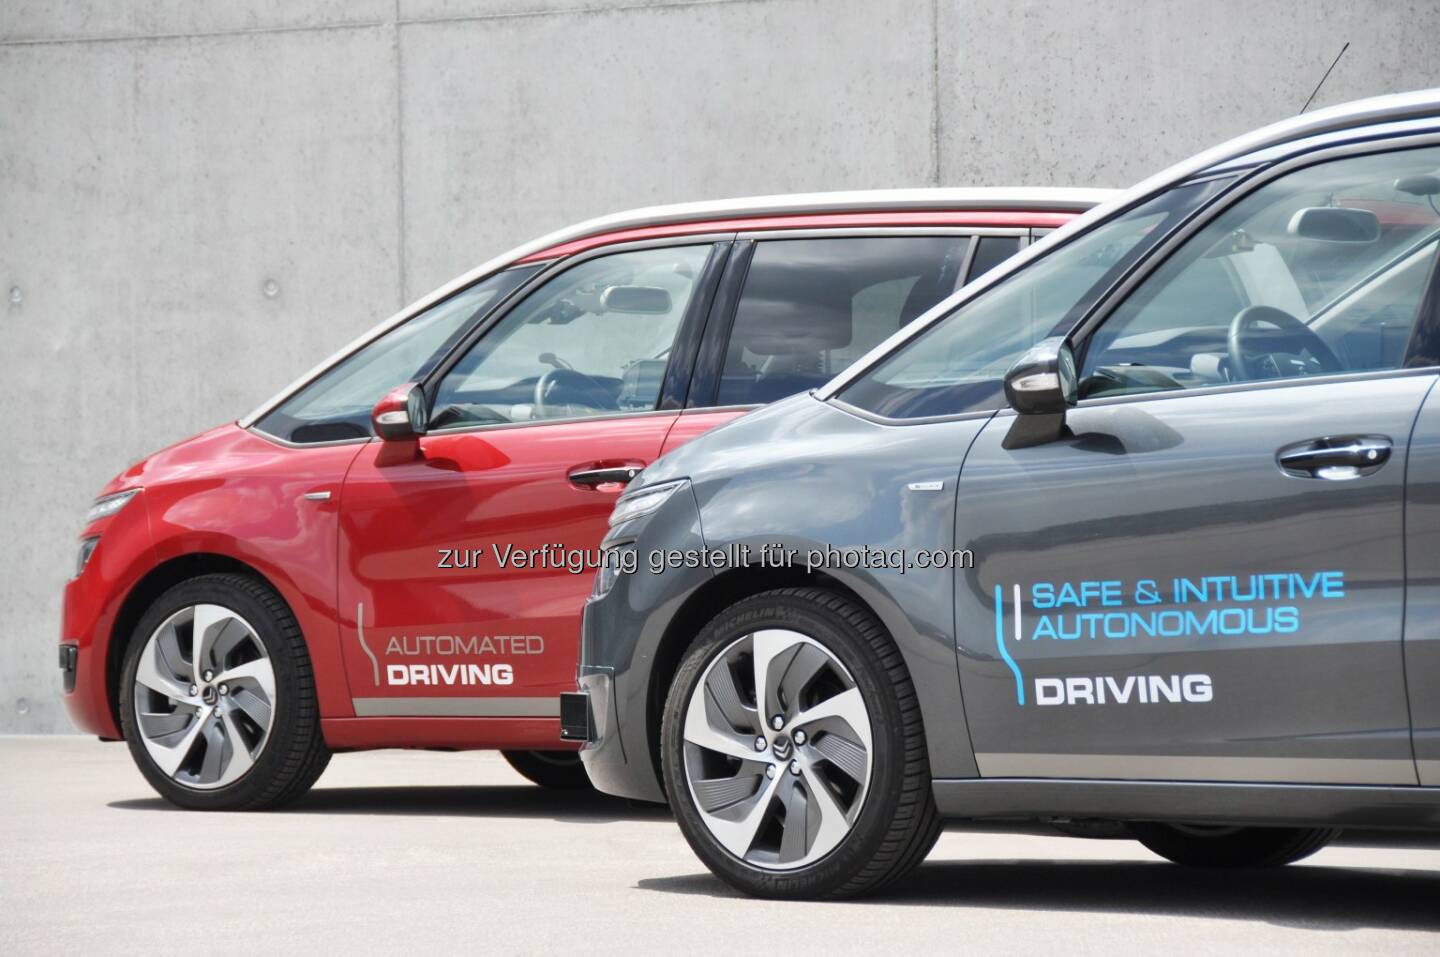 Autonome Fahrzeuge der Groupe PSA : Seite Mitte 2015 bereits 60.000 Kilometer im autonomen Modus von Demonstrationsfahrzeugen der Groupe PSA zurückgelegt : Fotocredit: Groupe PSA